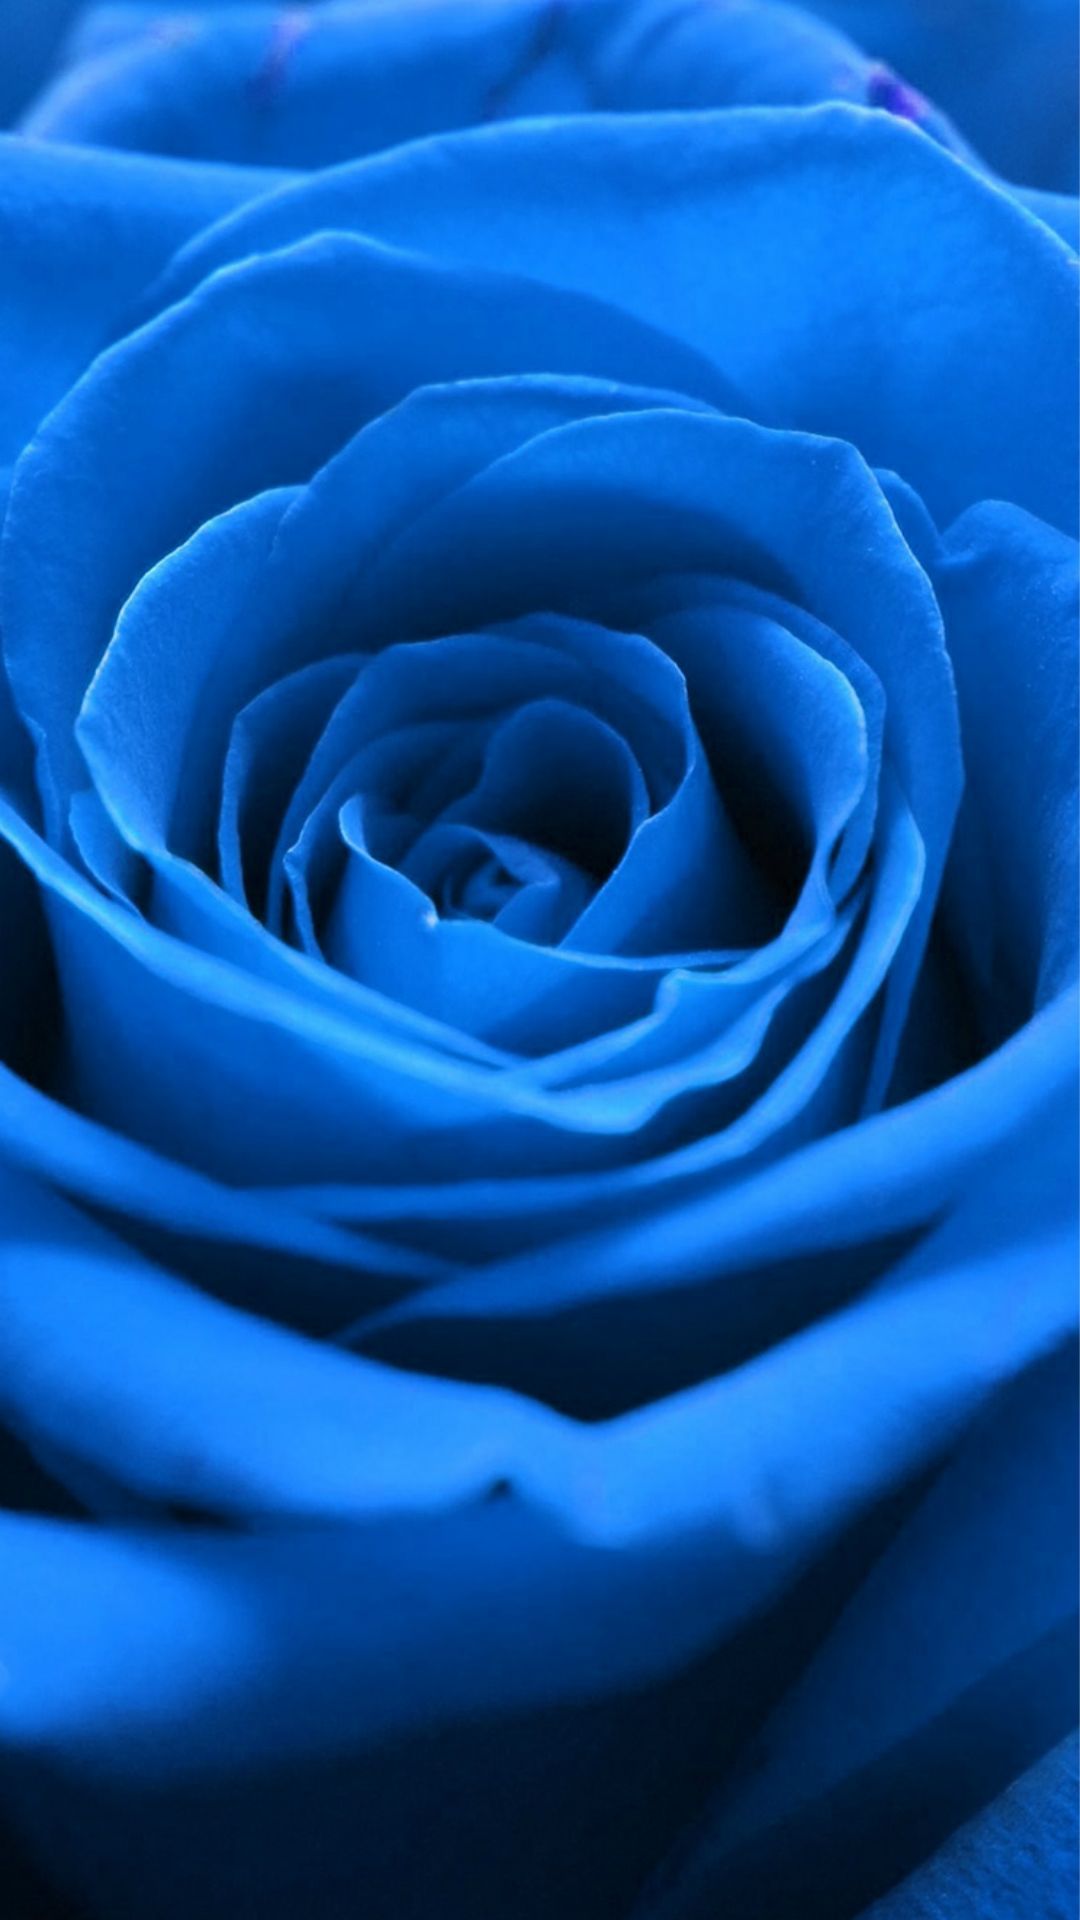 Nature Blue Rose Flower Macro iPhone 6 Wallpaper Download | iPhone ...